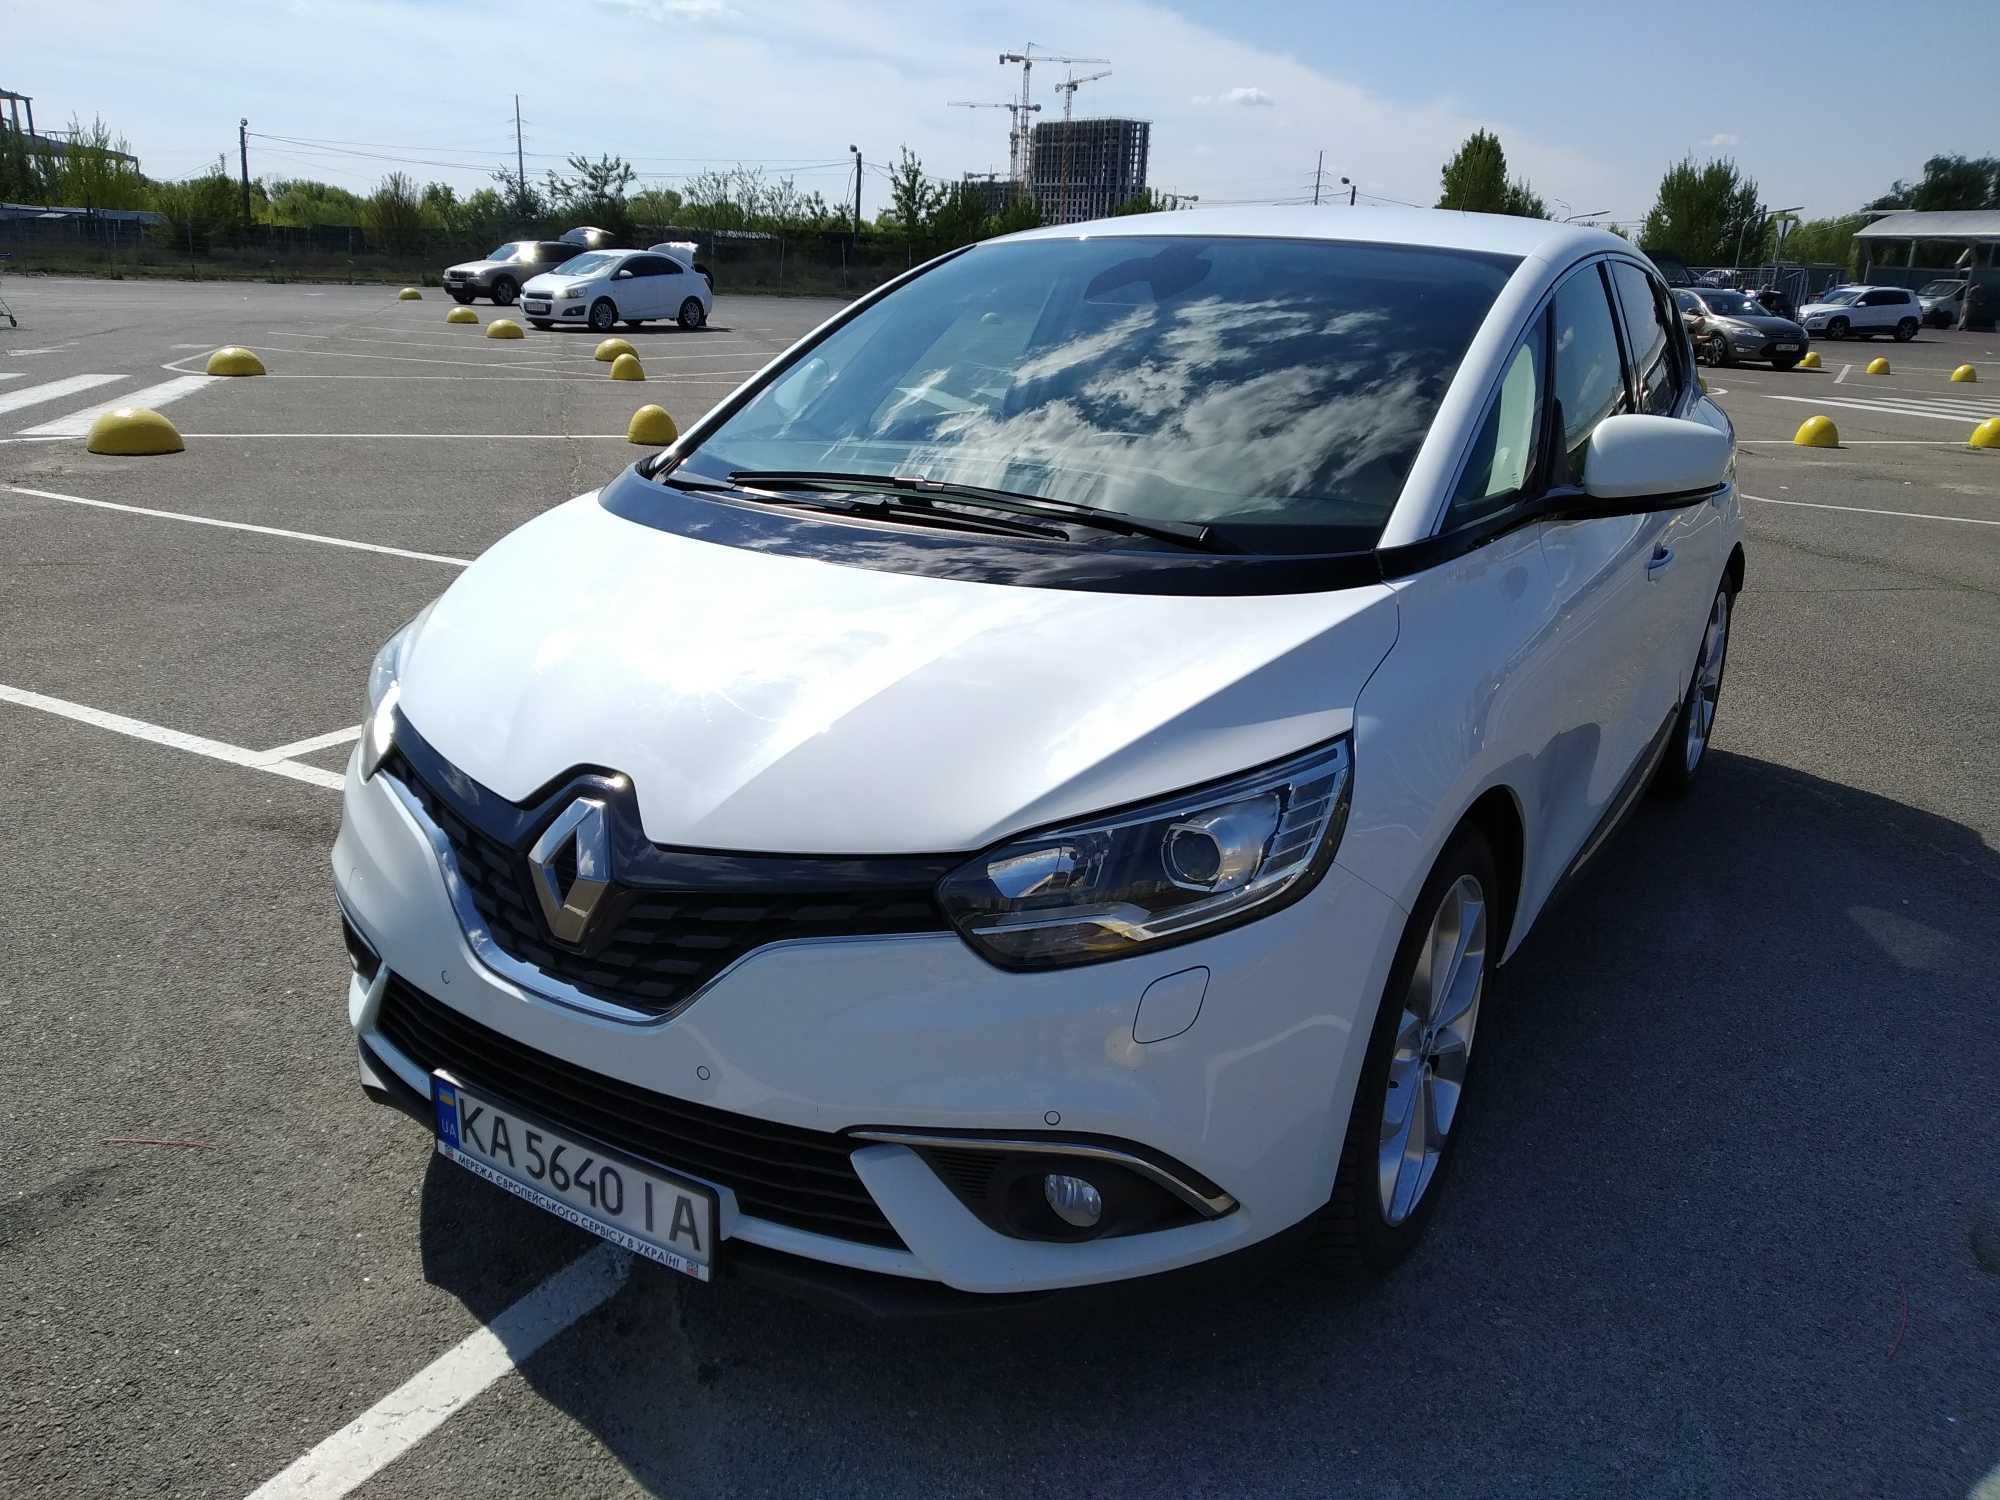 Renault Scenic IV 2017